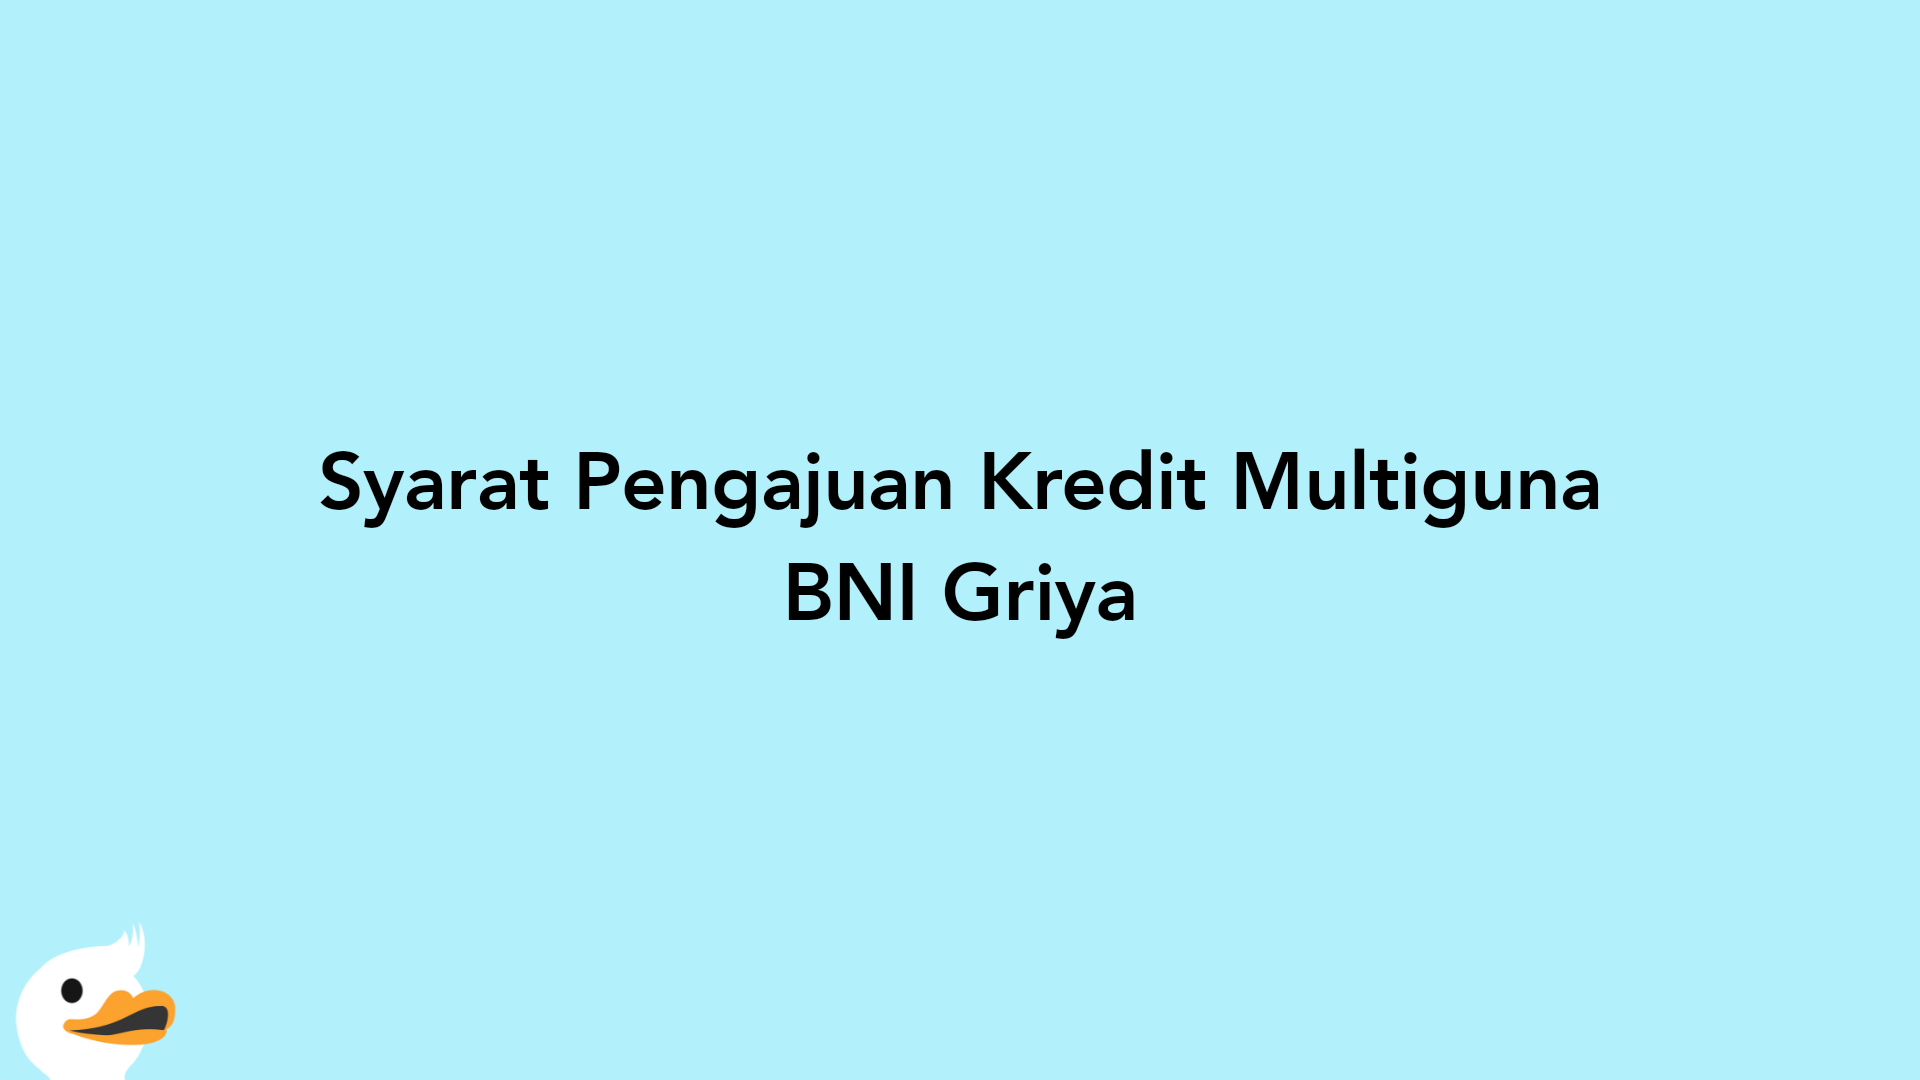 Syarat Pengajuan Kredit Multiguna BNI Griya